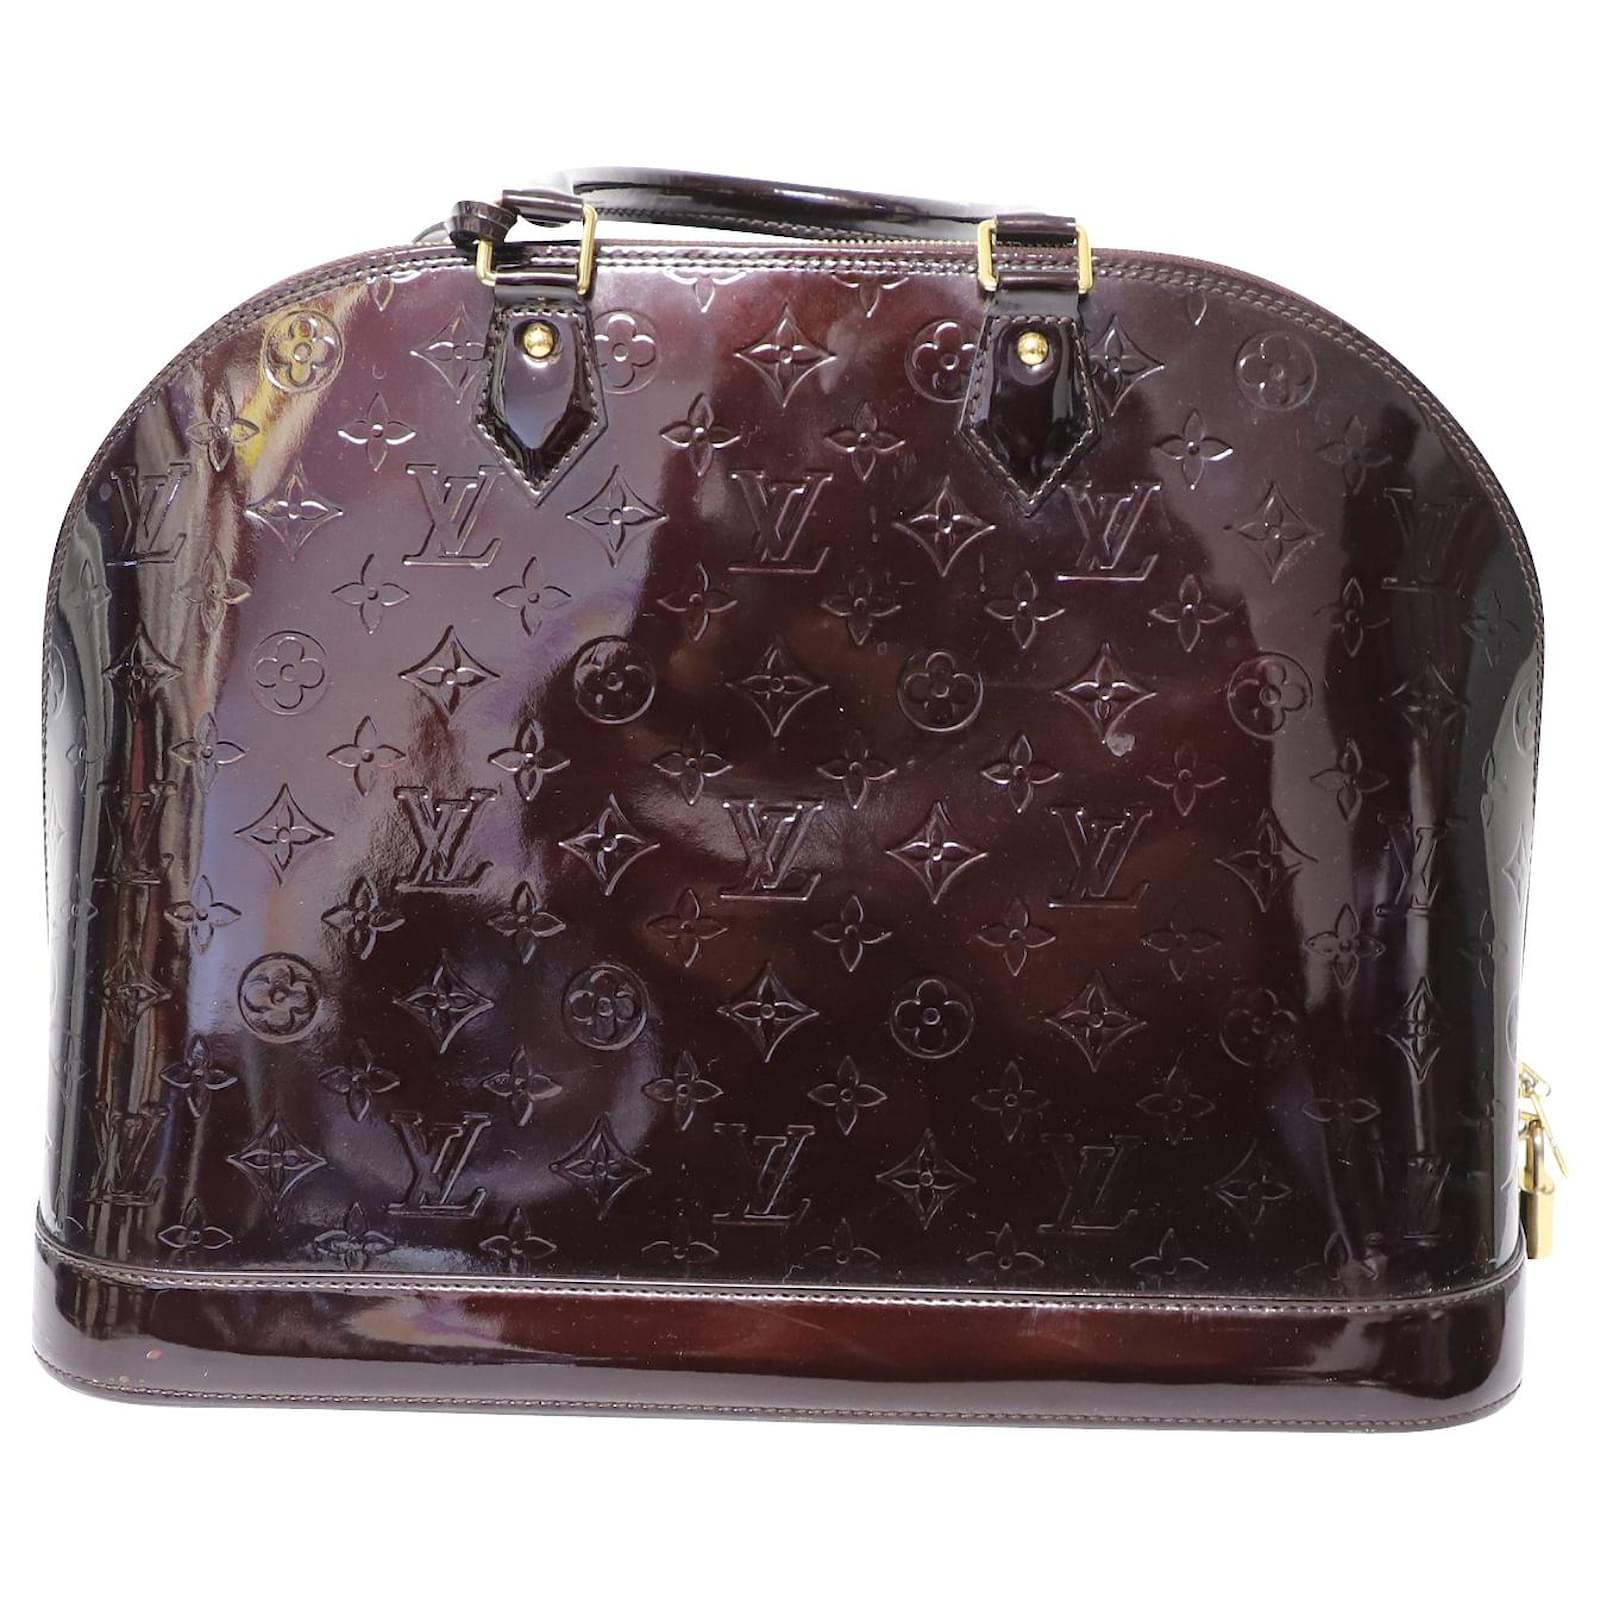 Alma bb patent leather handbag Louis Vuitton Burgundy in Patent